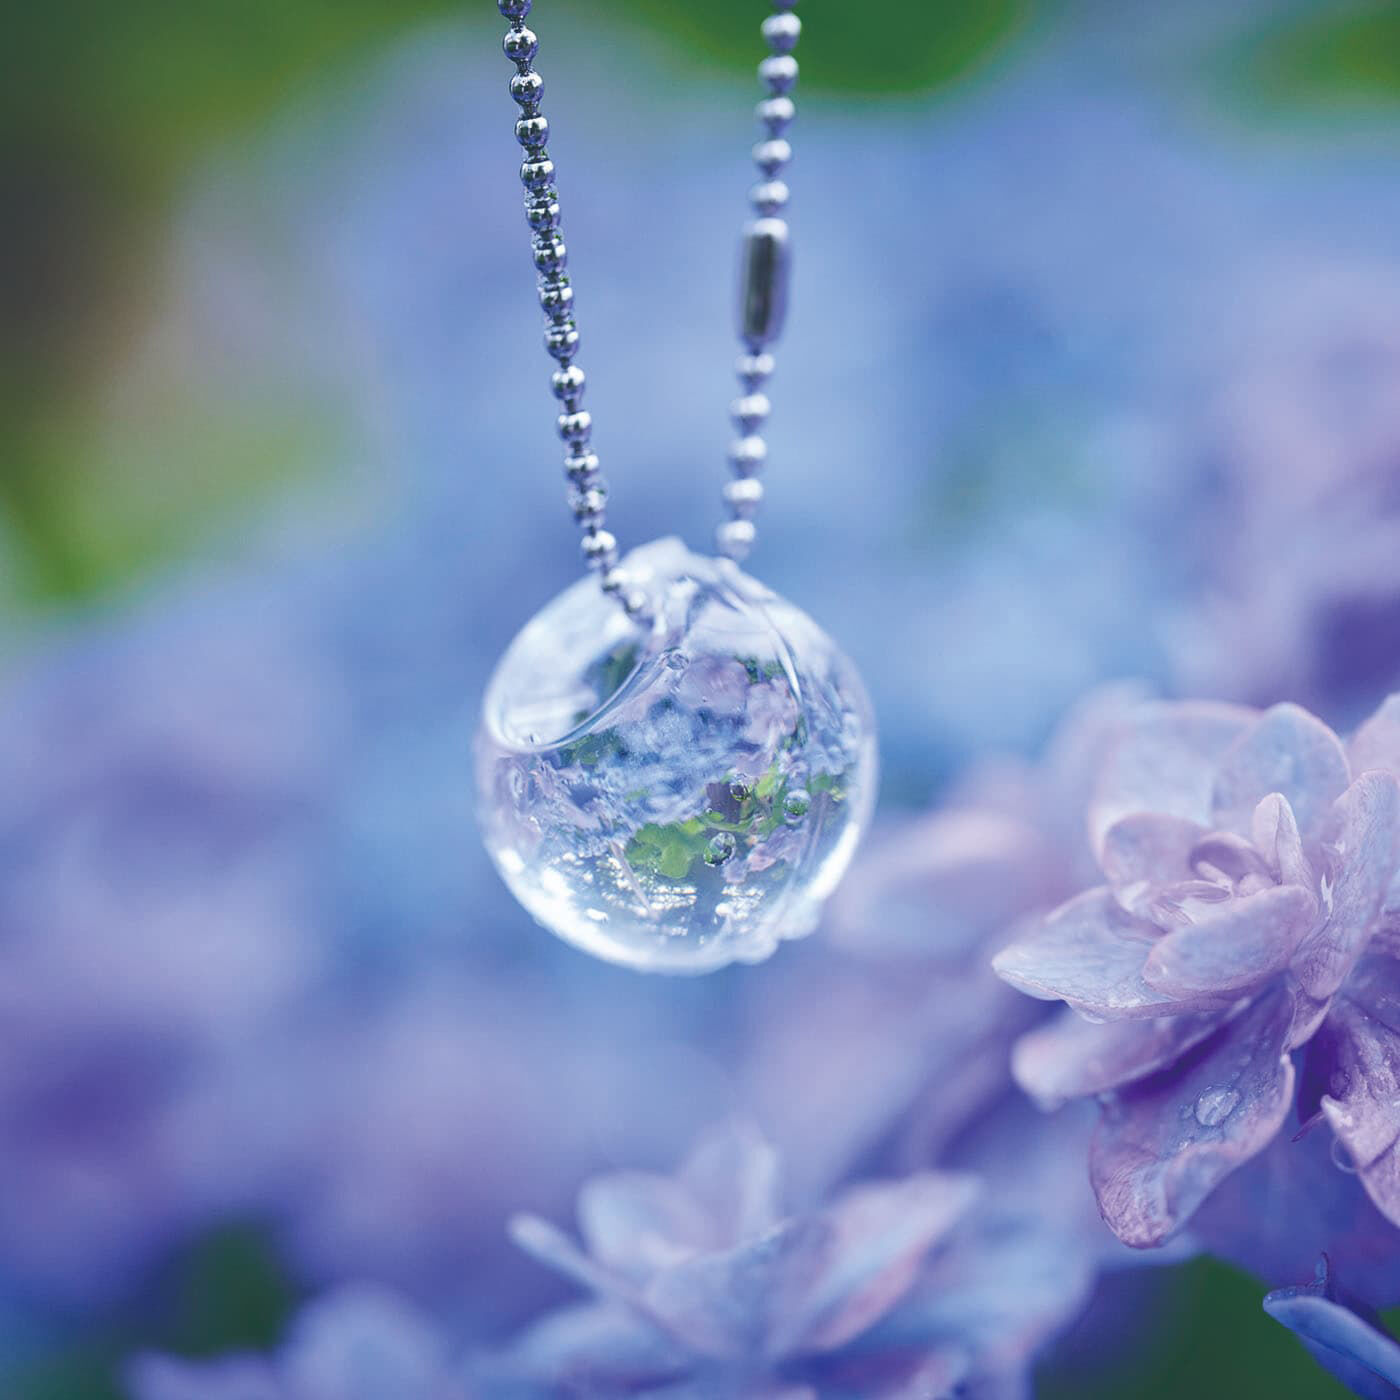 YOU+MORE!|YOU+MORE!　雨空に咲きこぼれる 紫陽花の傘の会